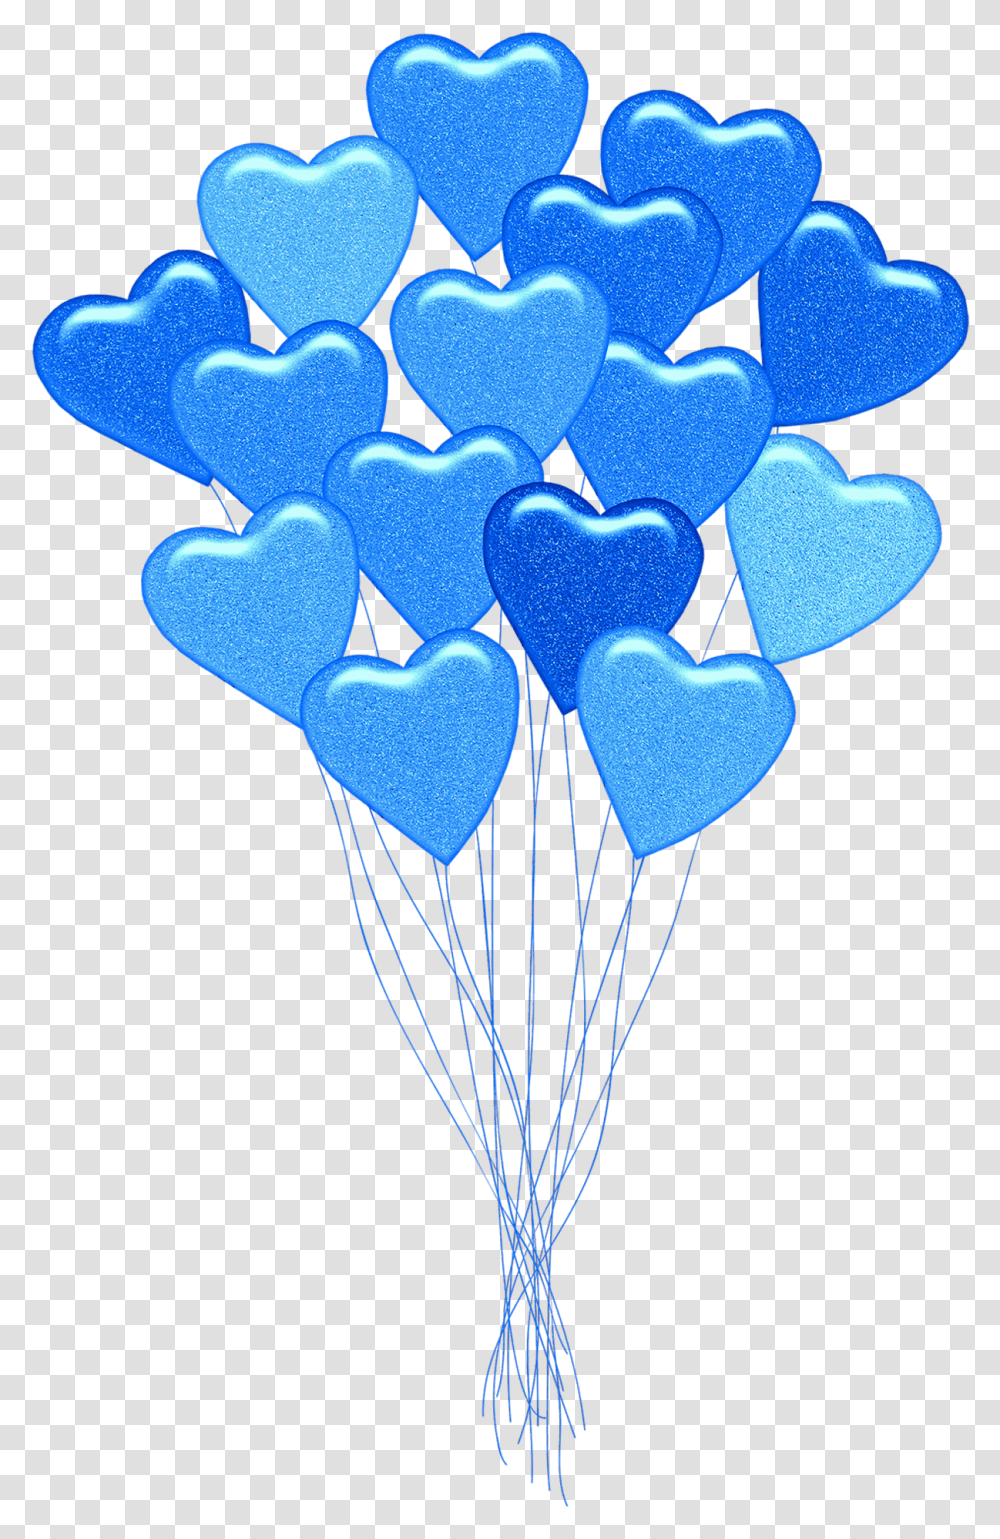 Blue Hearts Balo De, Rug, Kite, Toy Transparent Png